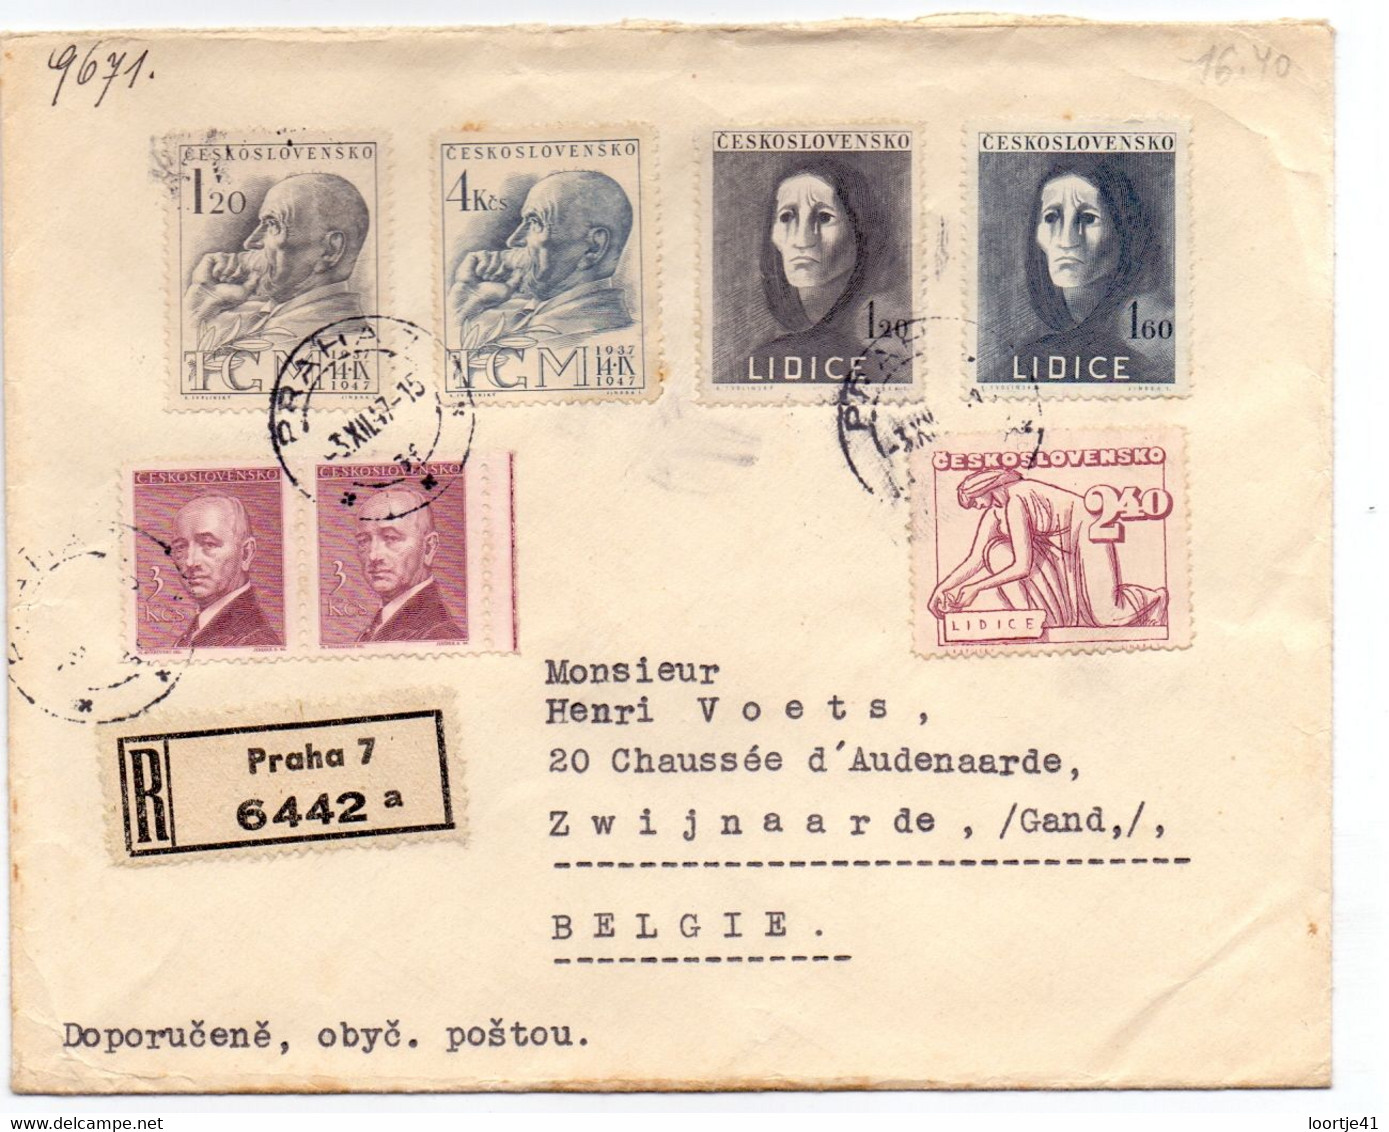 Omslag Enveloppe - Praha Ceskoslovensko Naar Gand Gent - Recommandé Stempel Cachet 1947 - Briefe